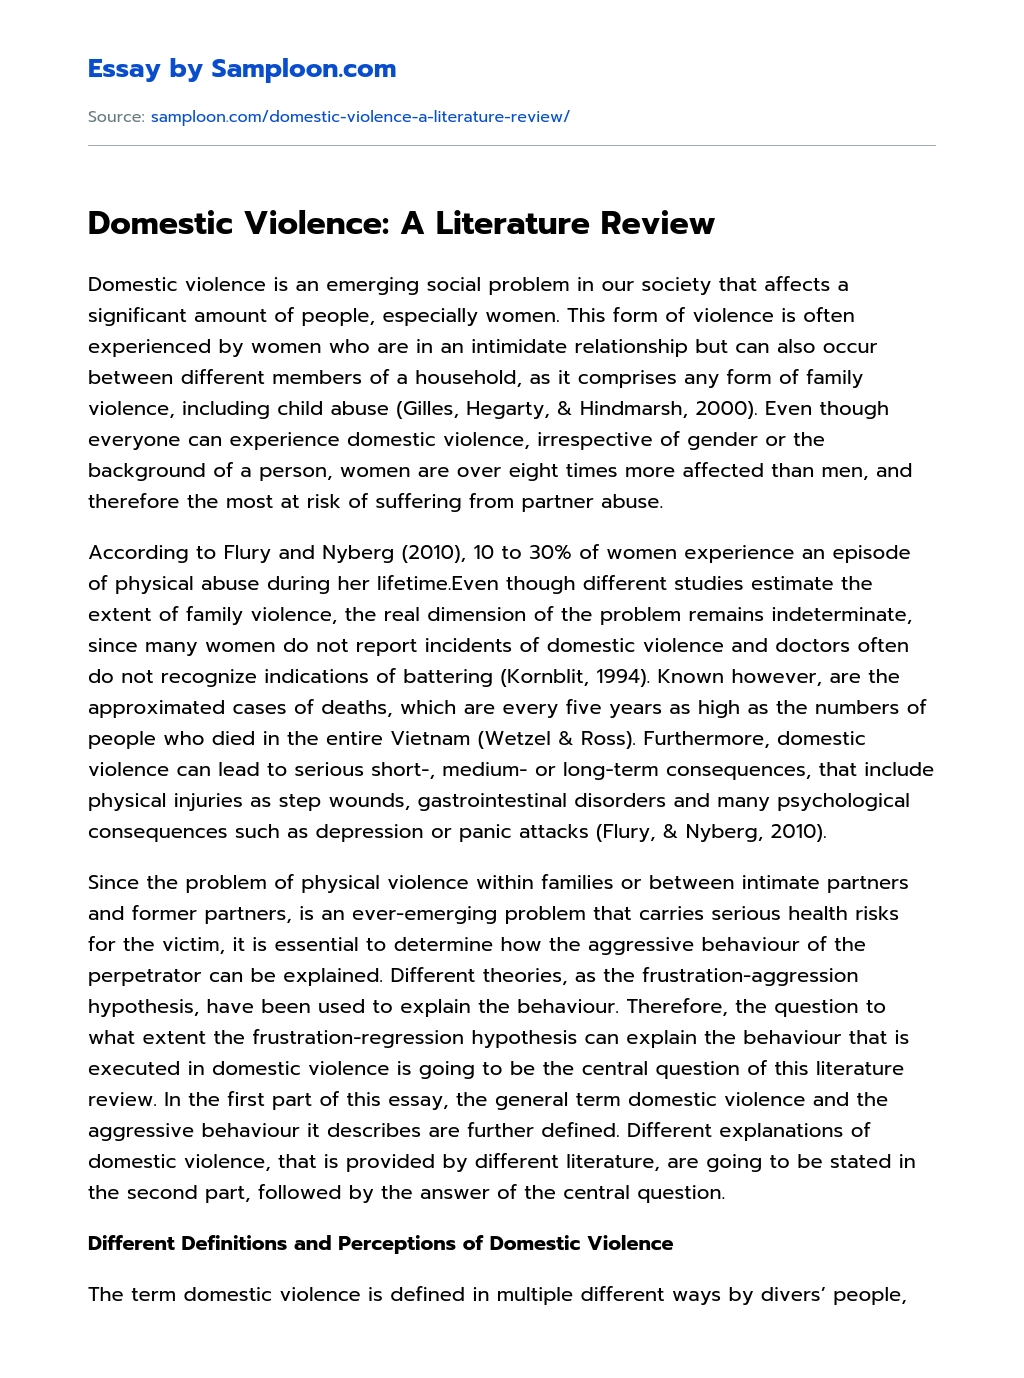 Domestic Violence: A Literature Review Argumentative Essay essay